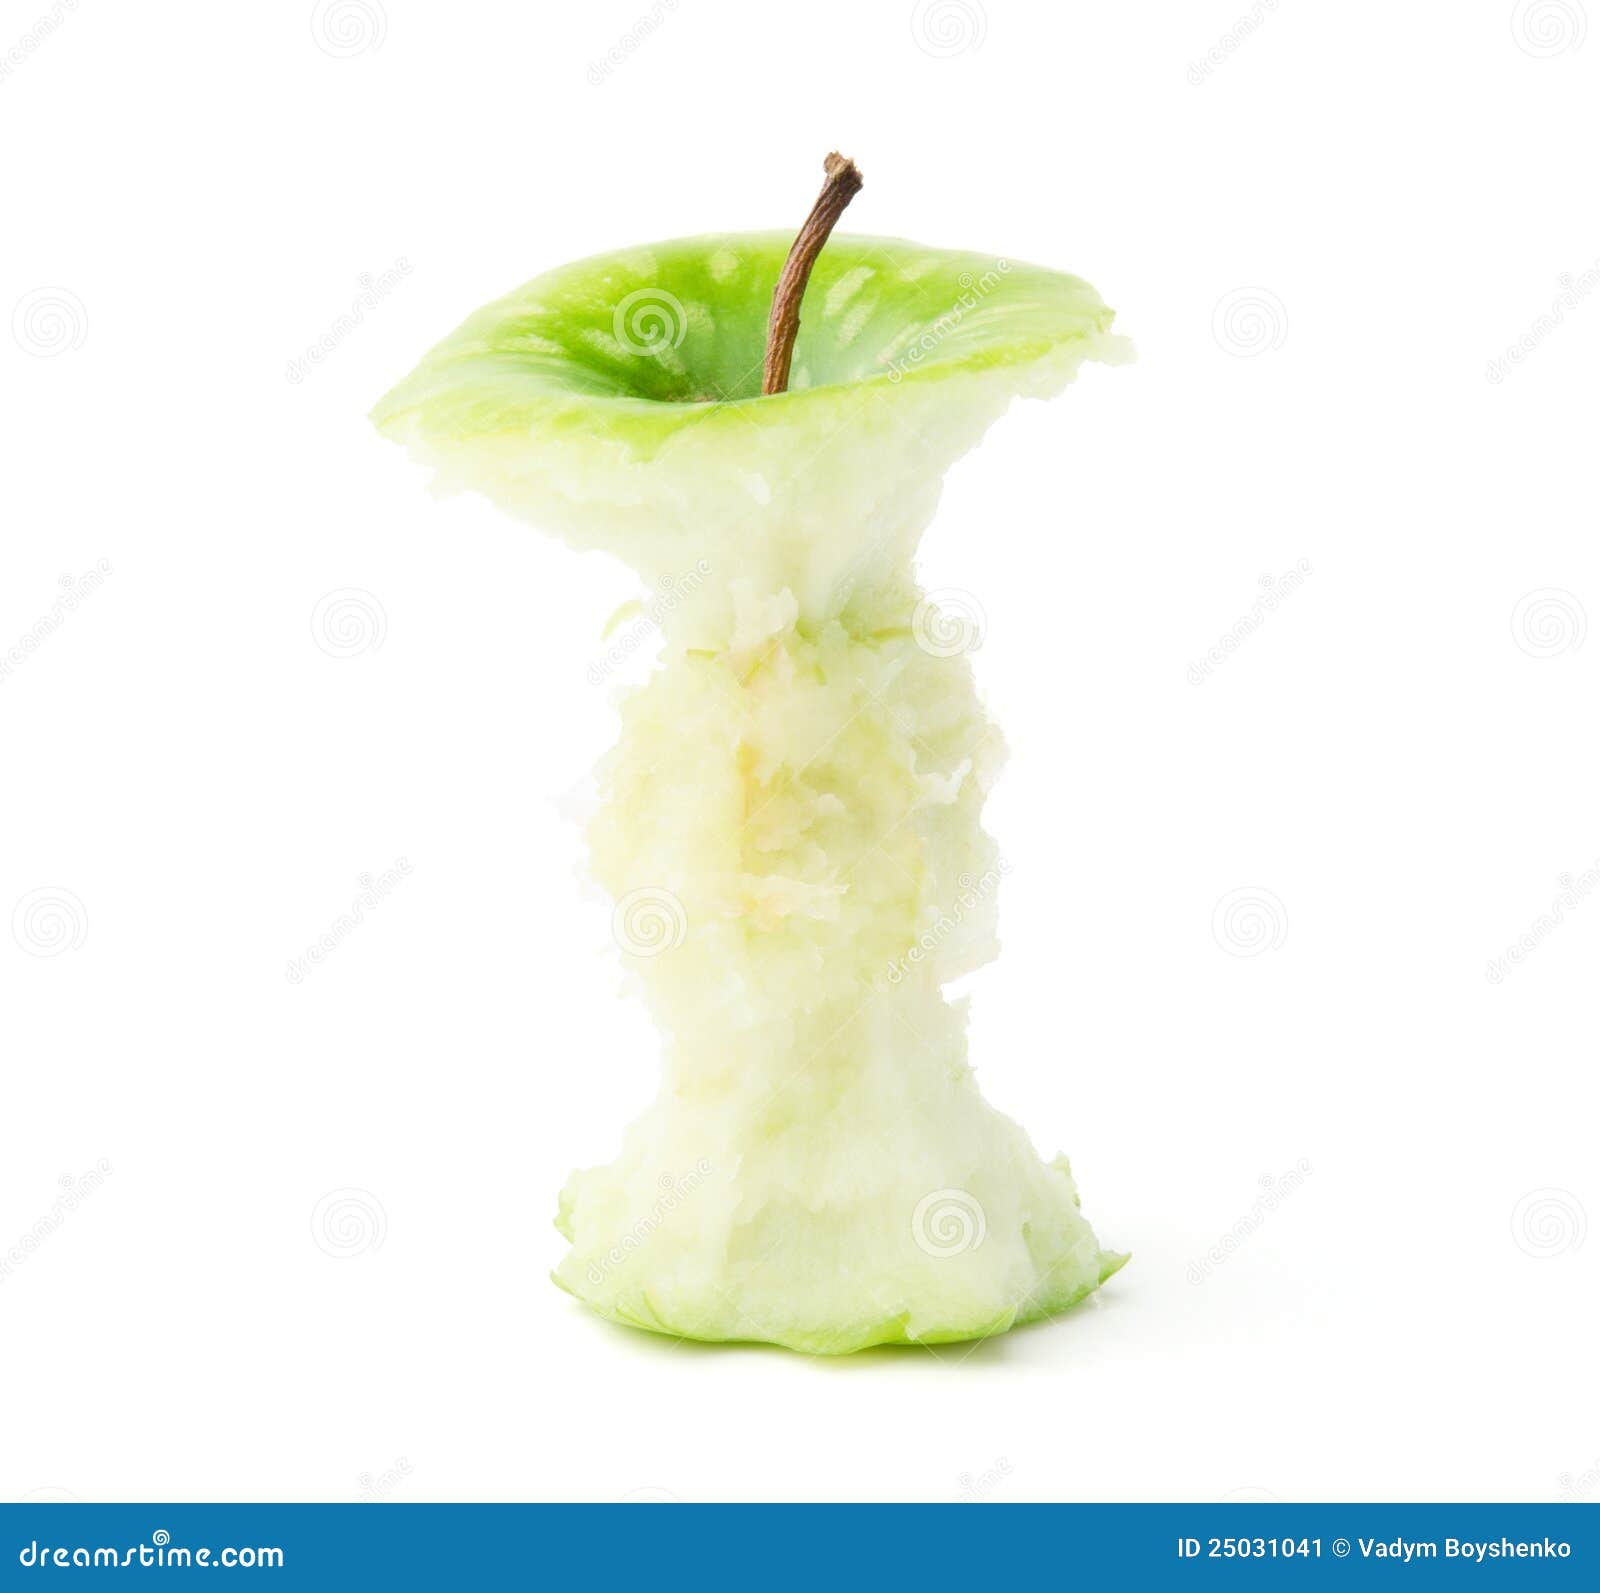 green-apple-core-25031041.jpg